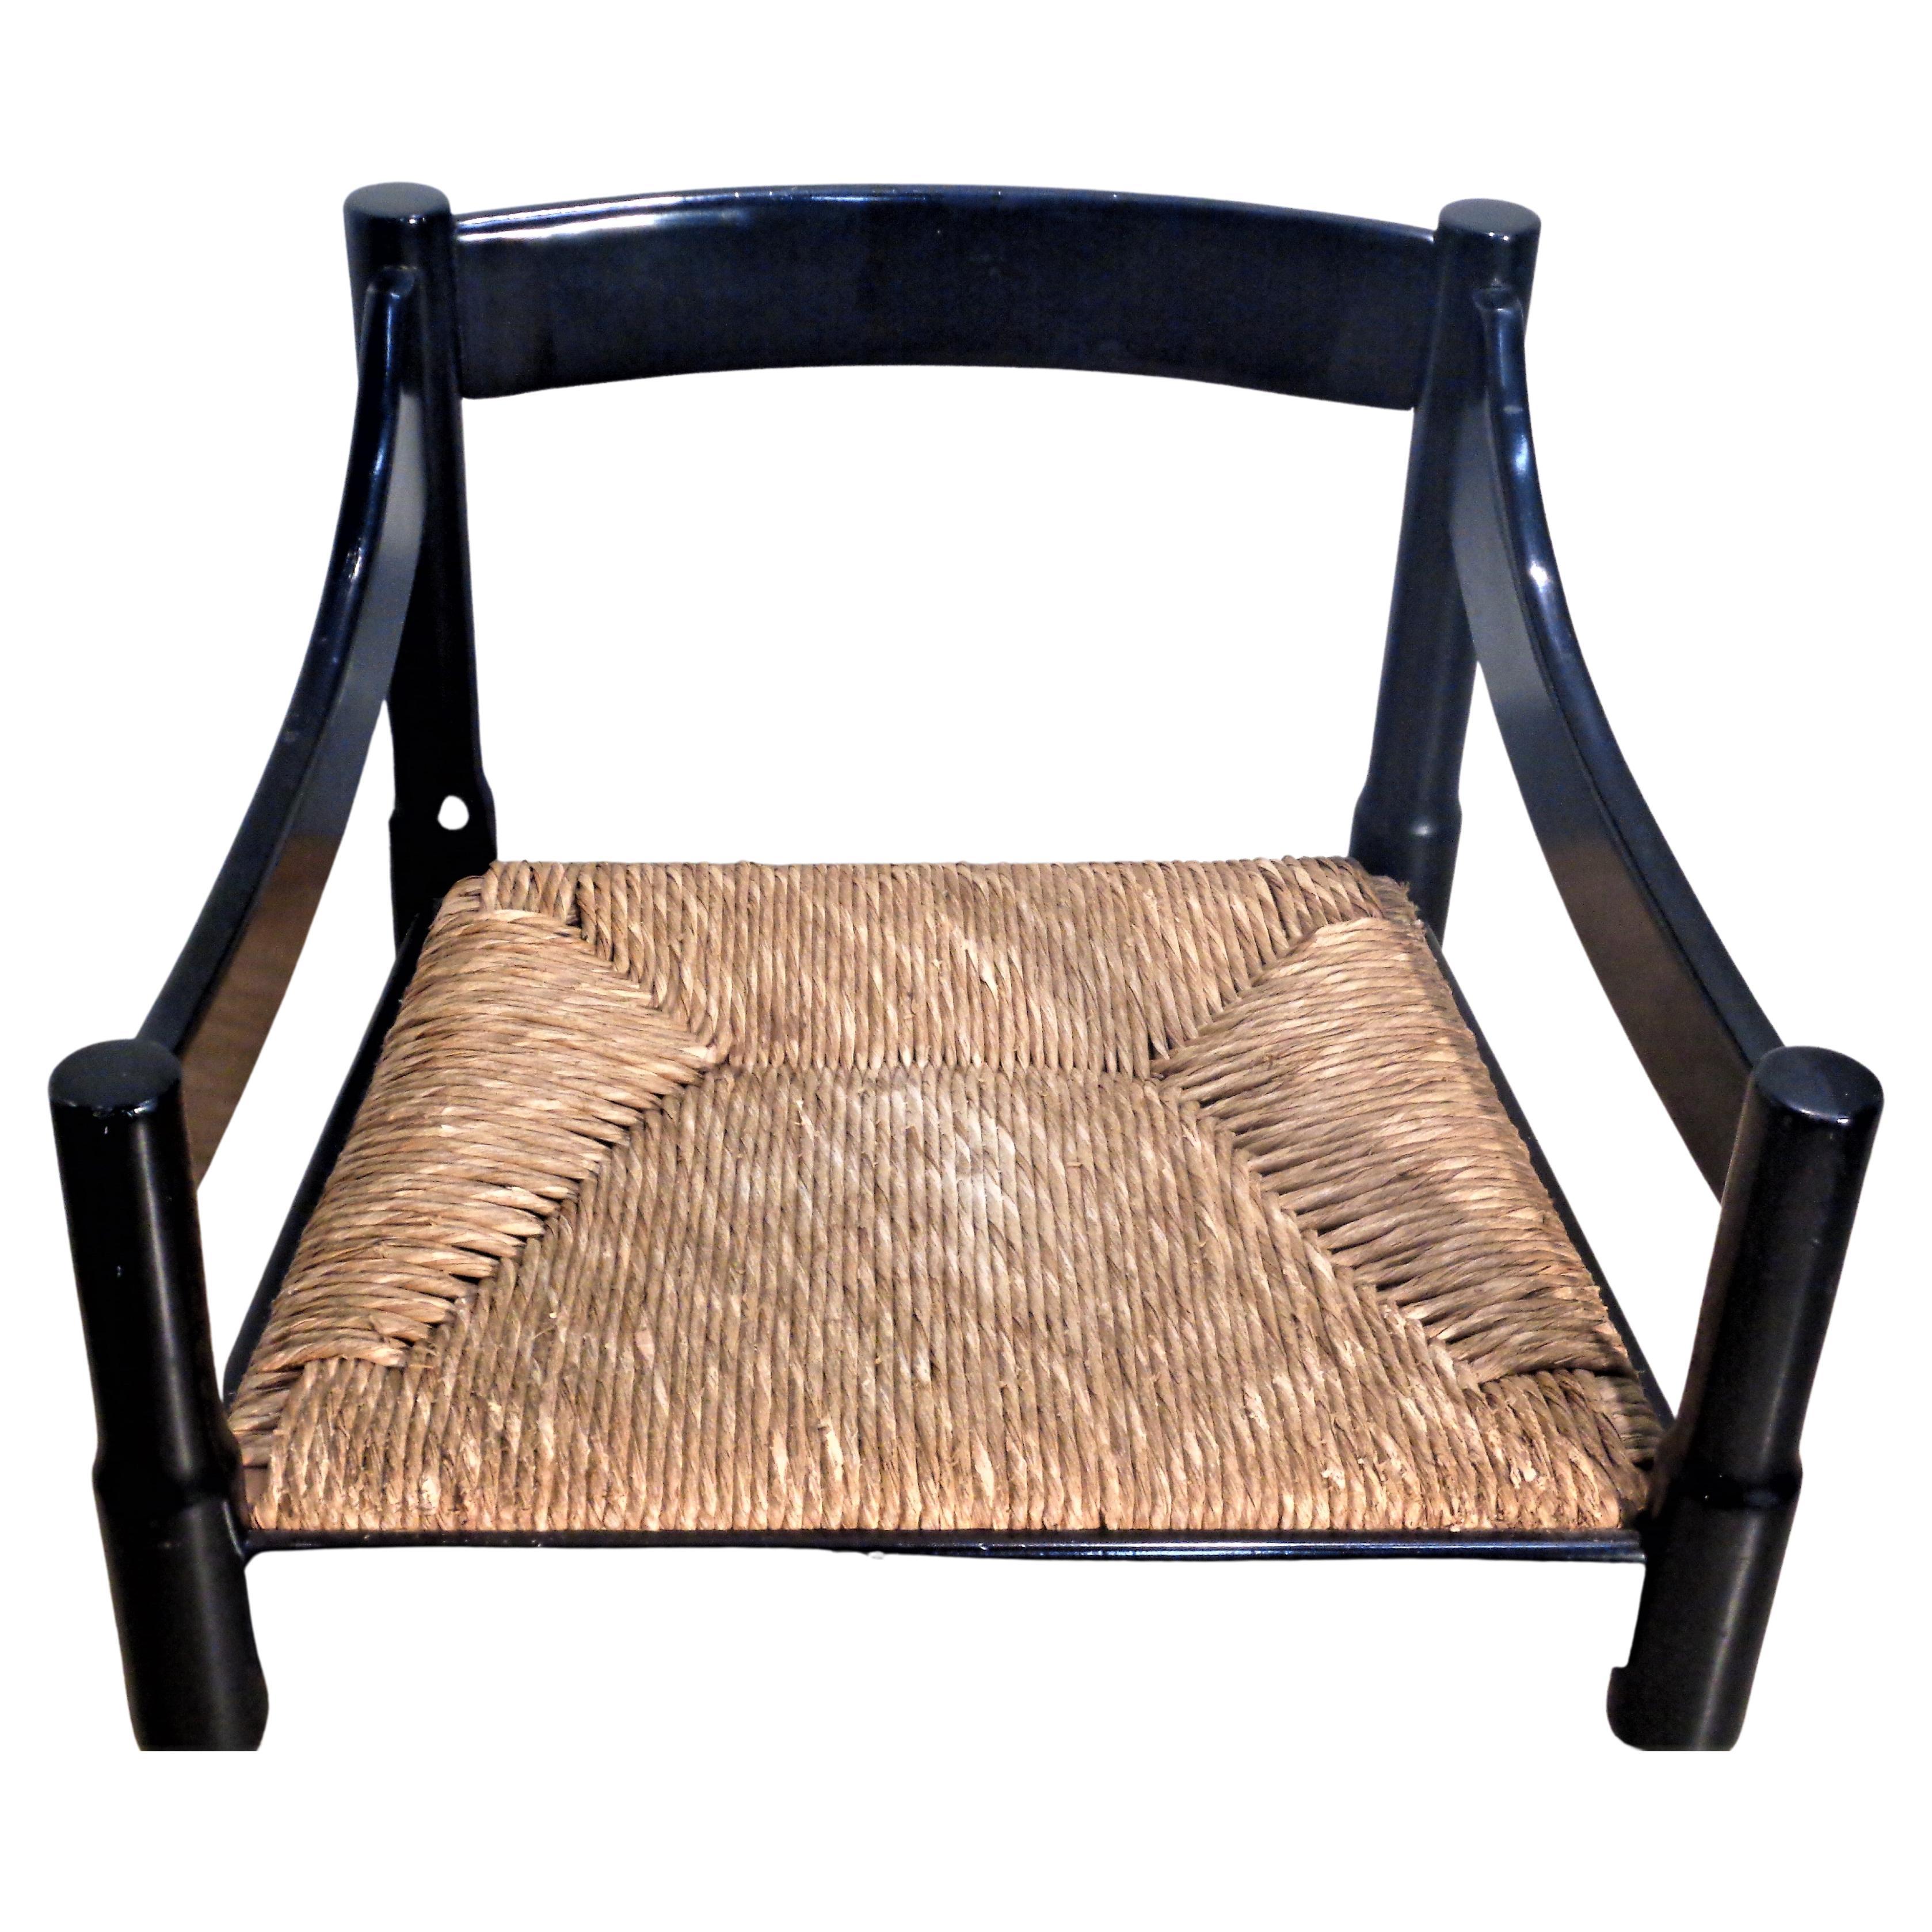 Rush Vico Magistretti 'Carimate' Chairs - Made in Italy, 1960's